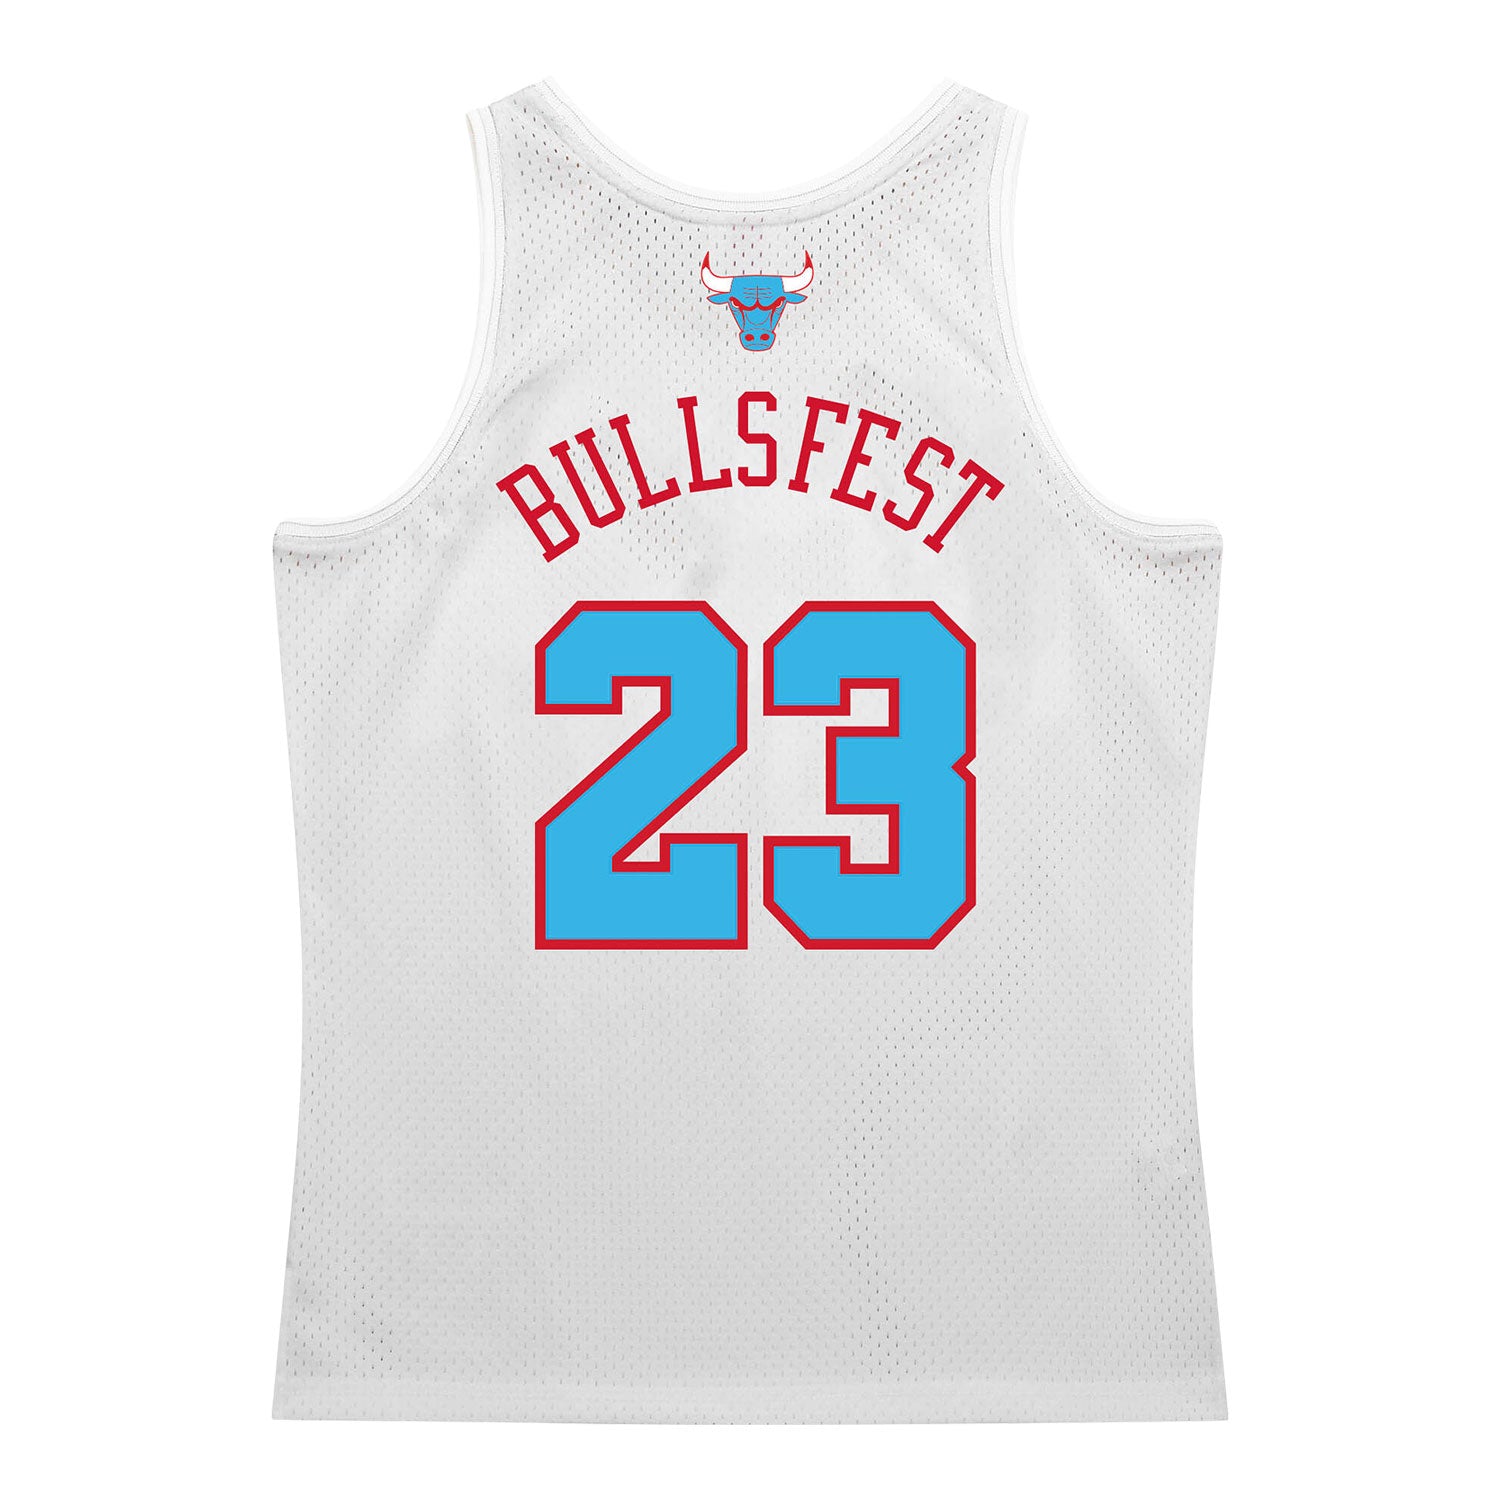 Blue Chicago Bulls NBA Jerseys for sale